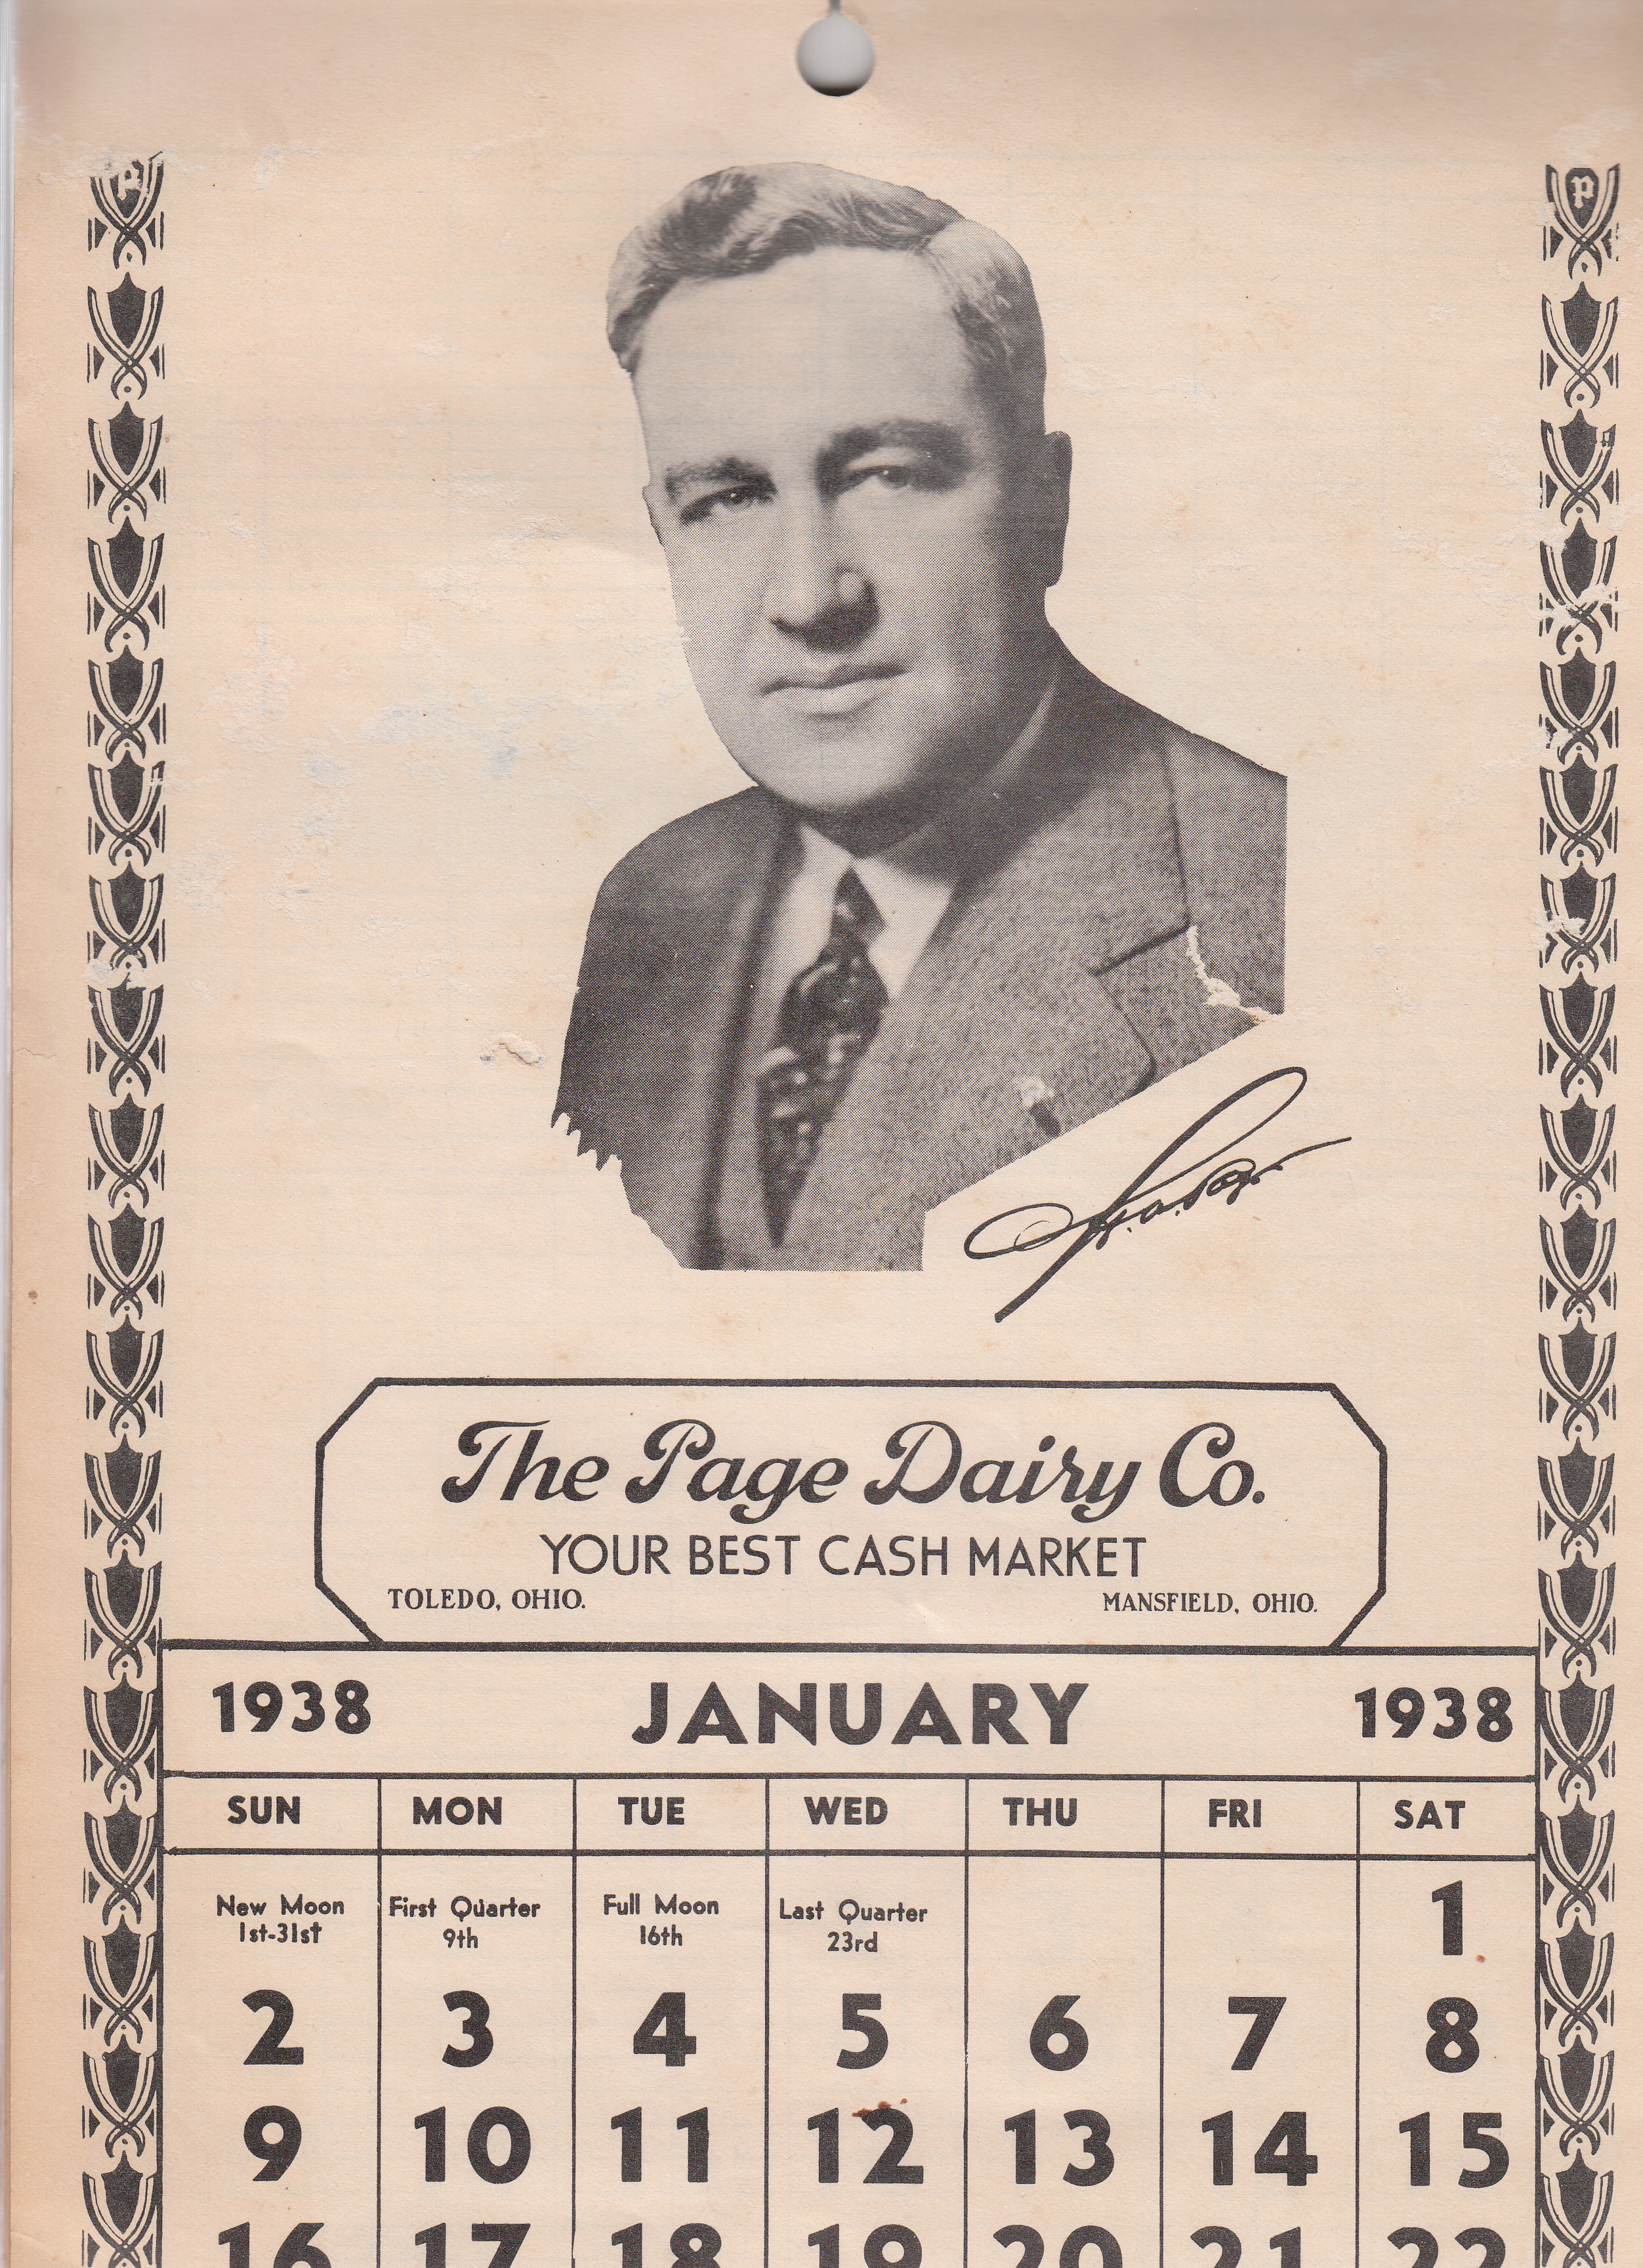 Page Dairy Calendar 1938 (2)